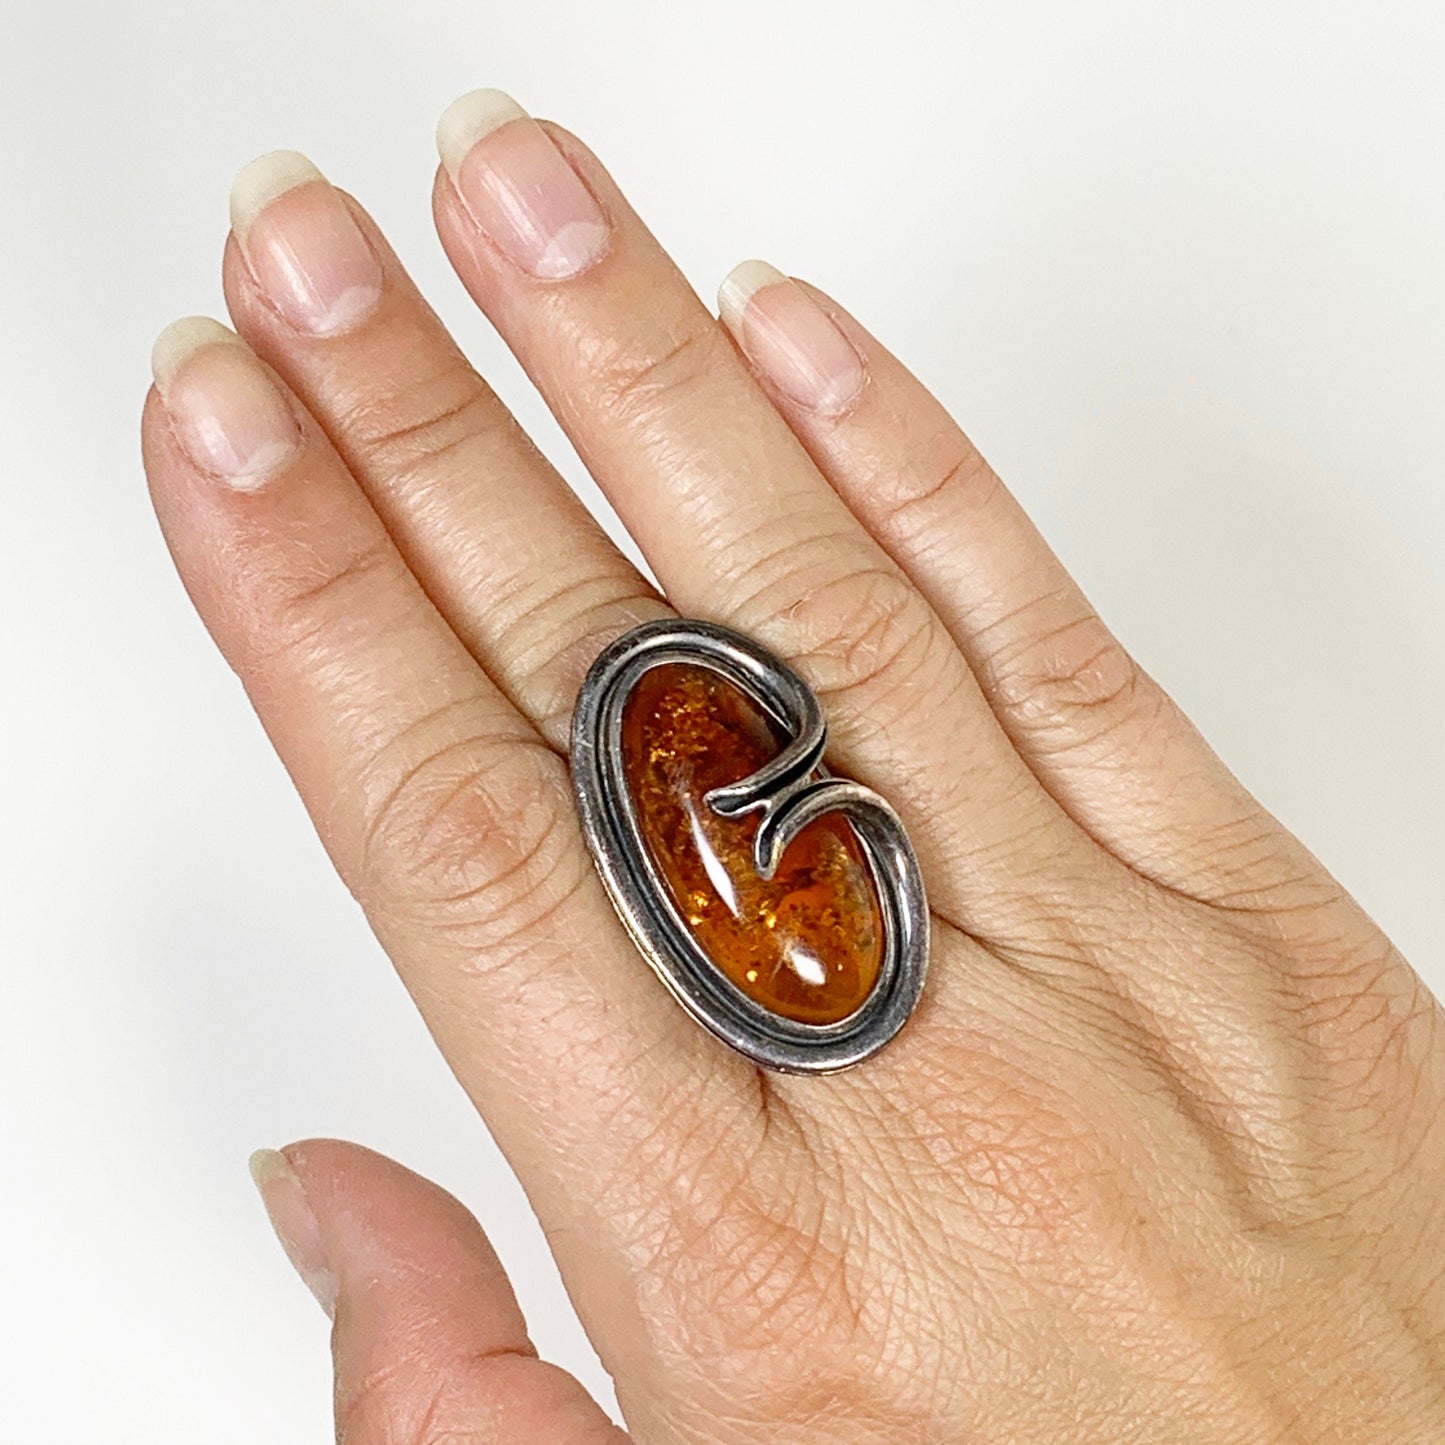 Vintage Silver Amber Ring | Large Amber Ring | Size 7